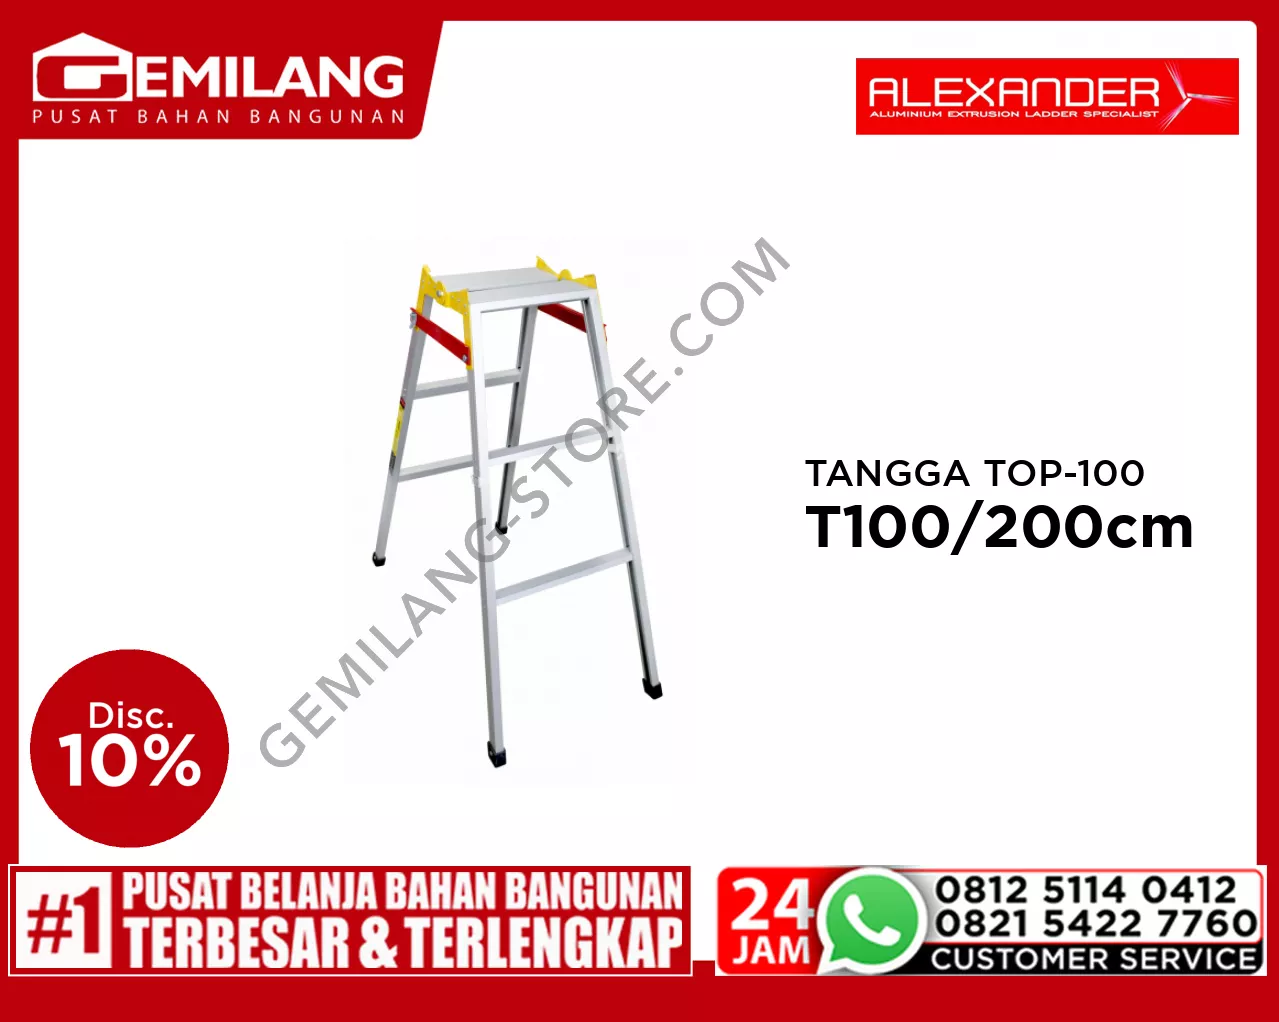 ALEXANDER TANGGA TOP-100 STEPS 3 T100/200cm